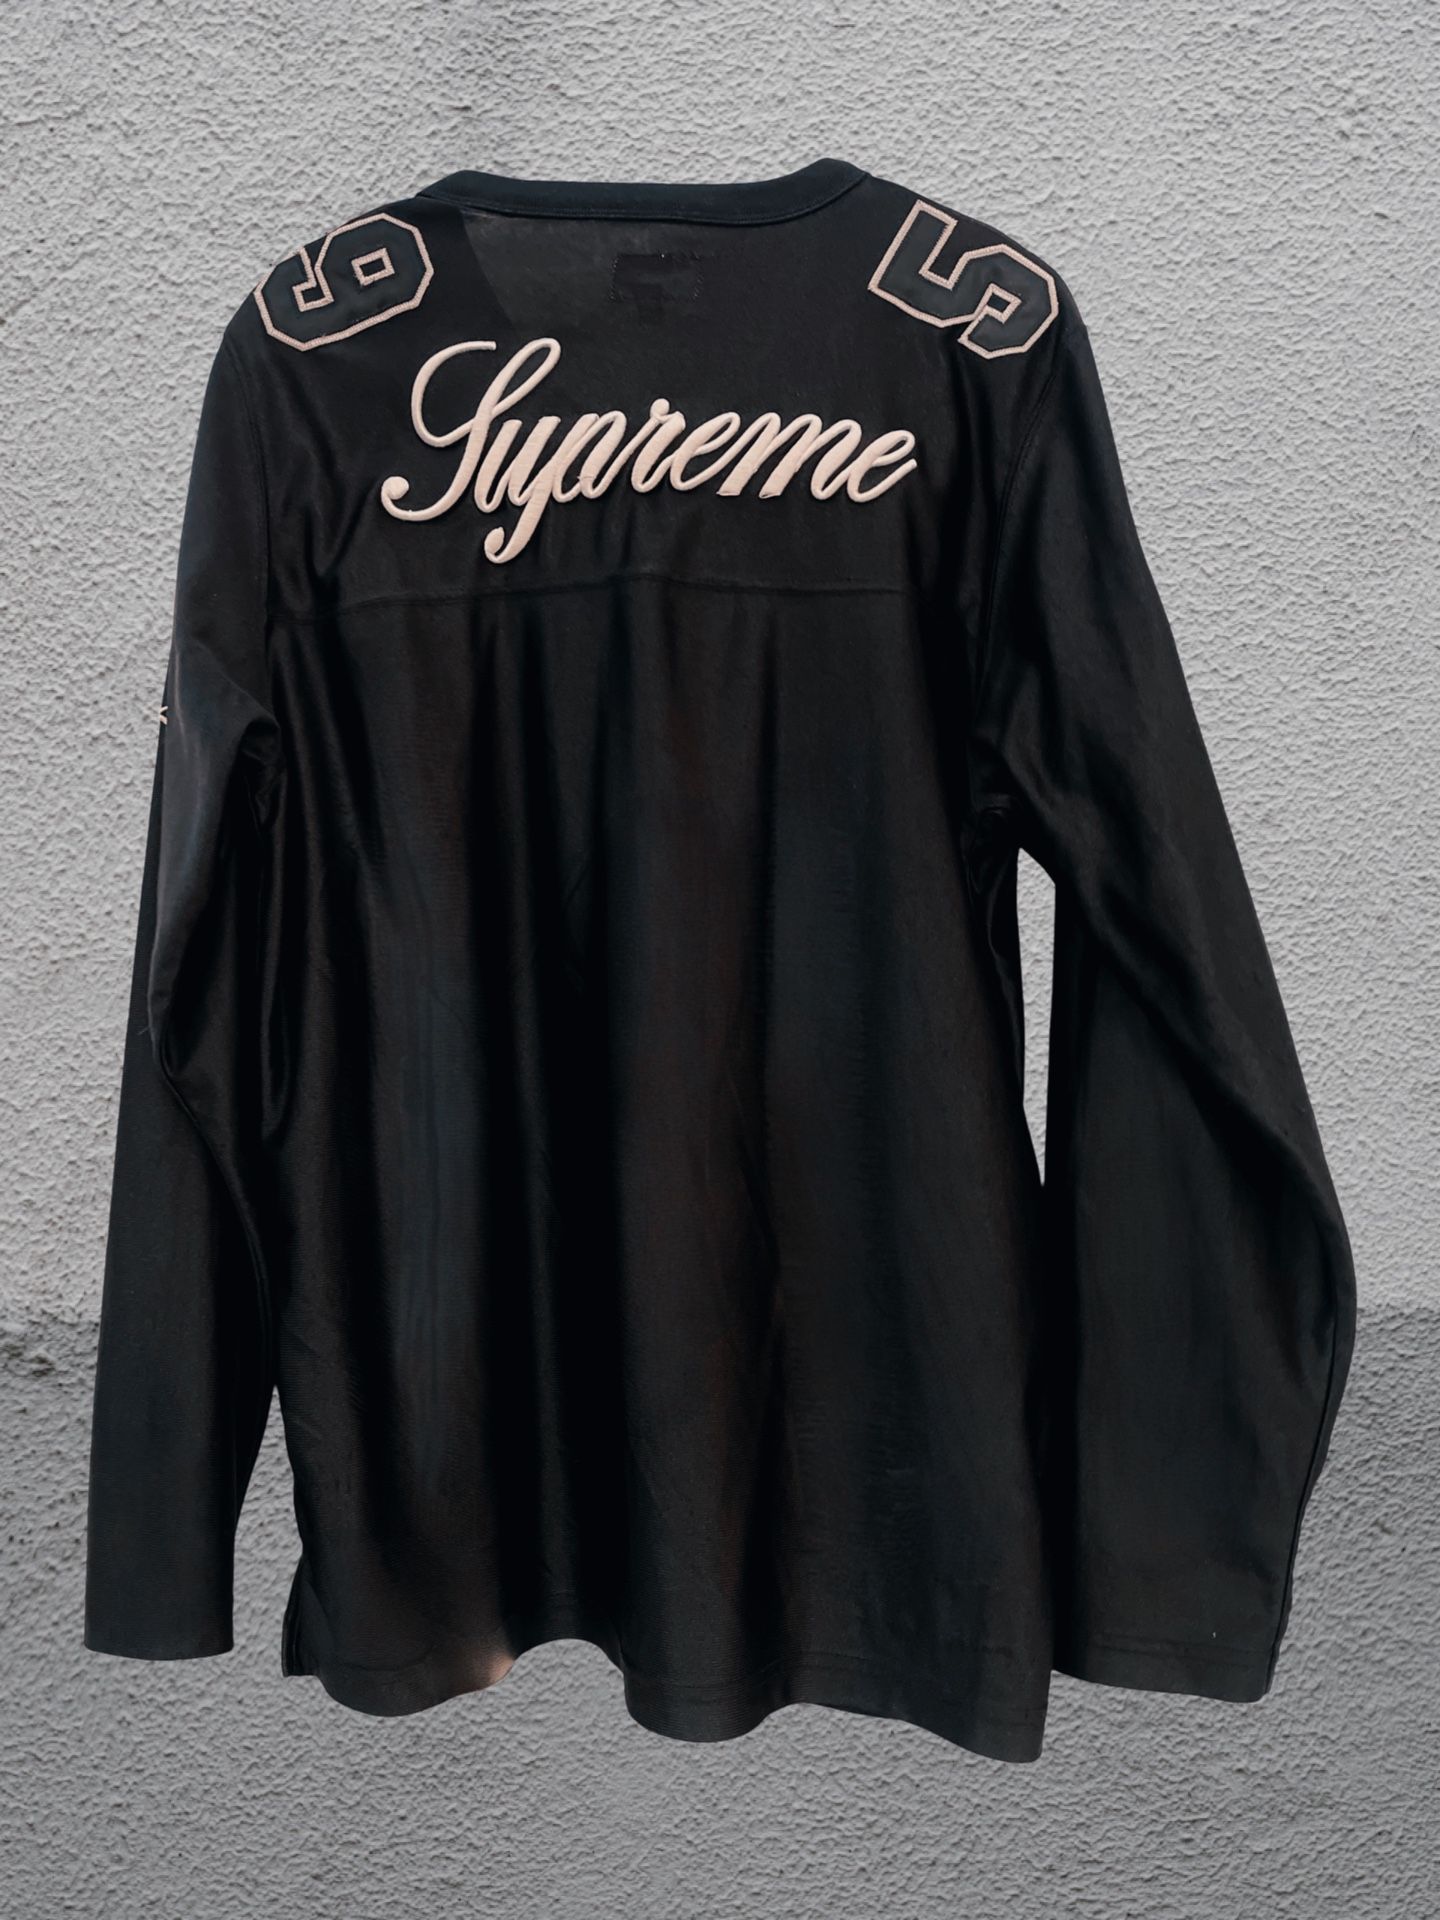 Supreme Long Sleeve Jersey In Black